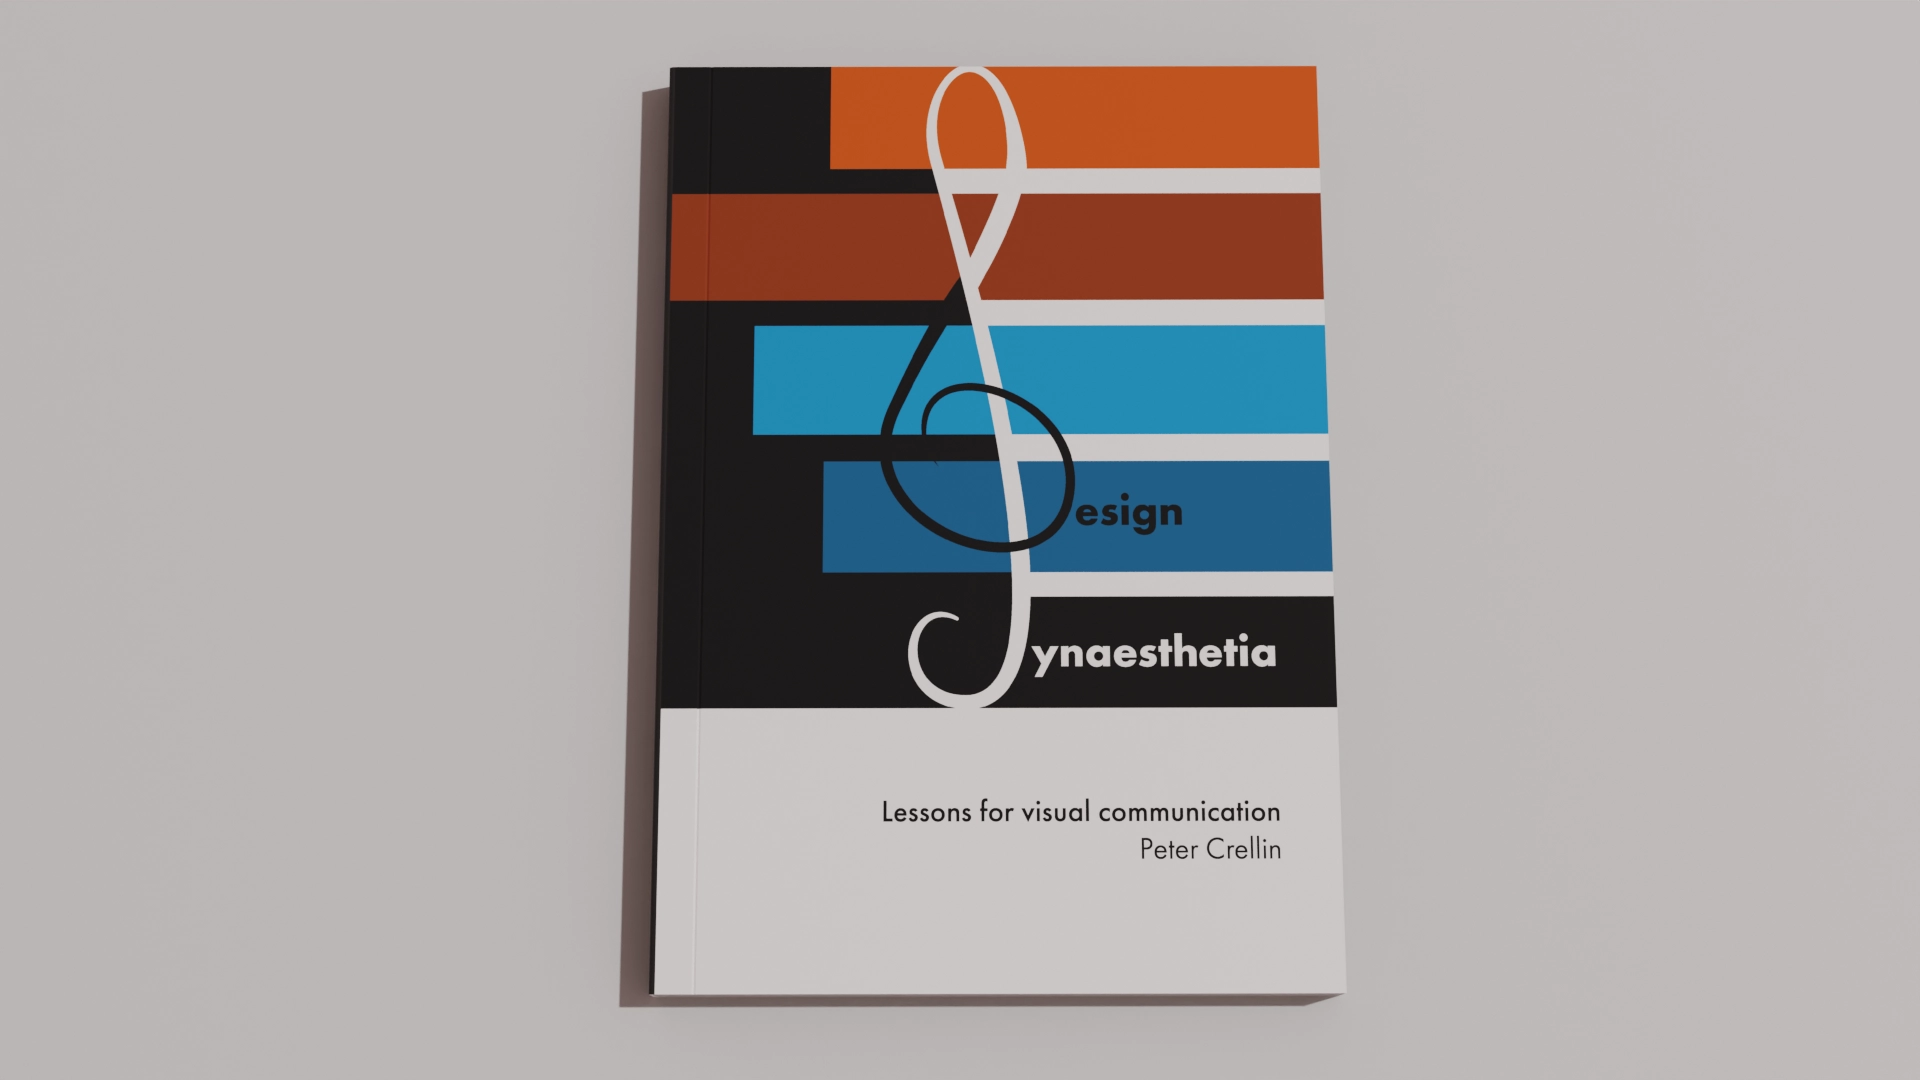 Design Synaesthesia Publication